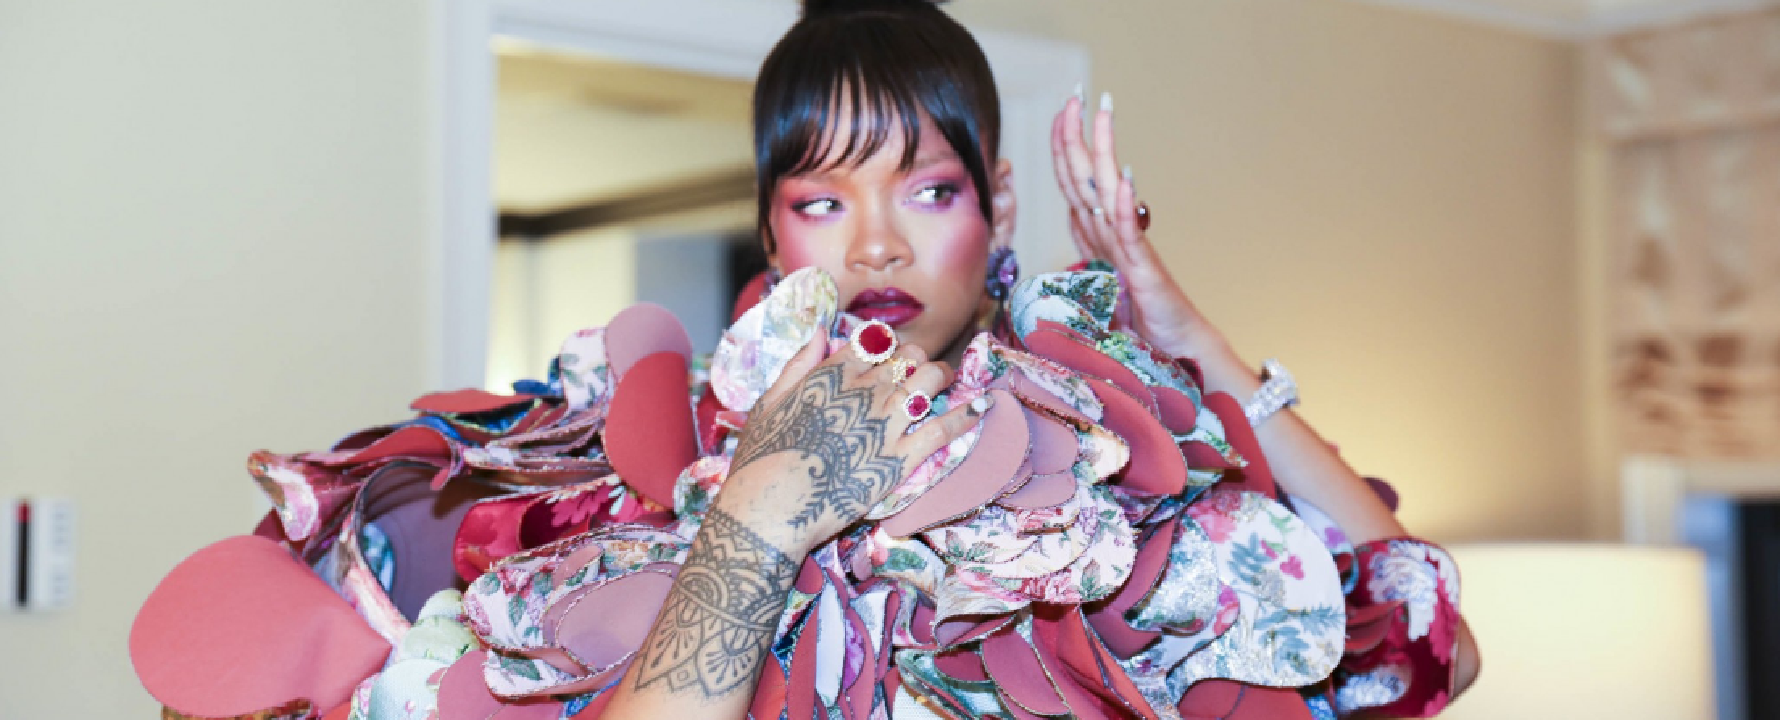 Promotional photograph of Rihanna.